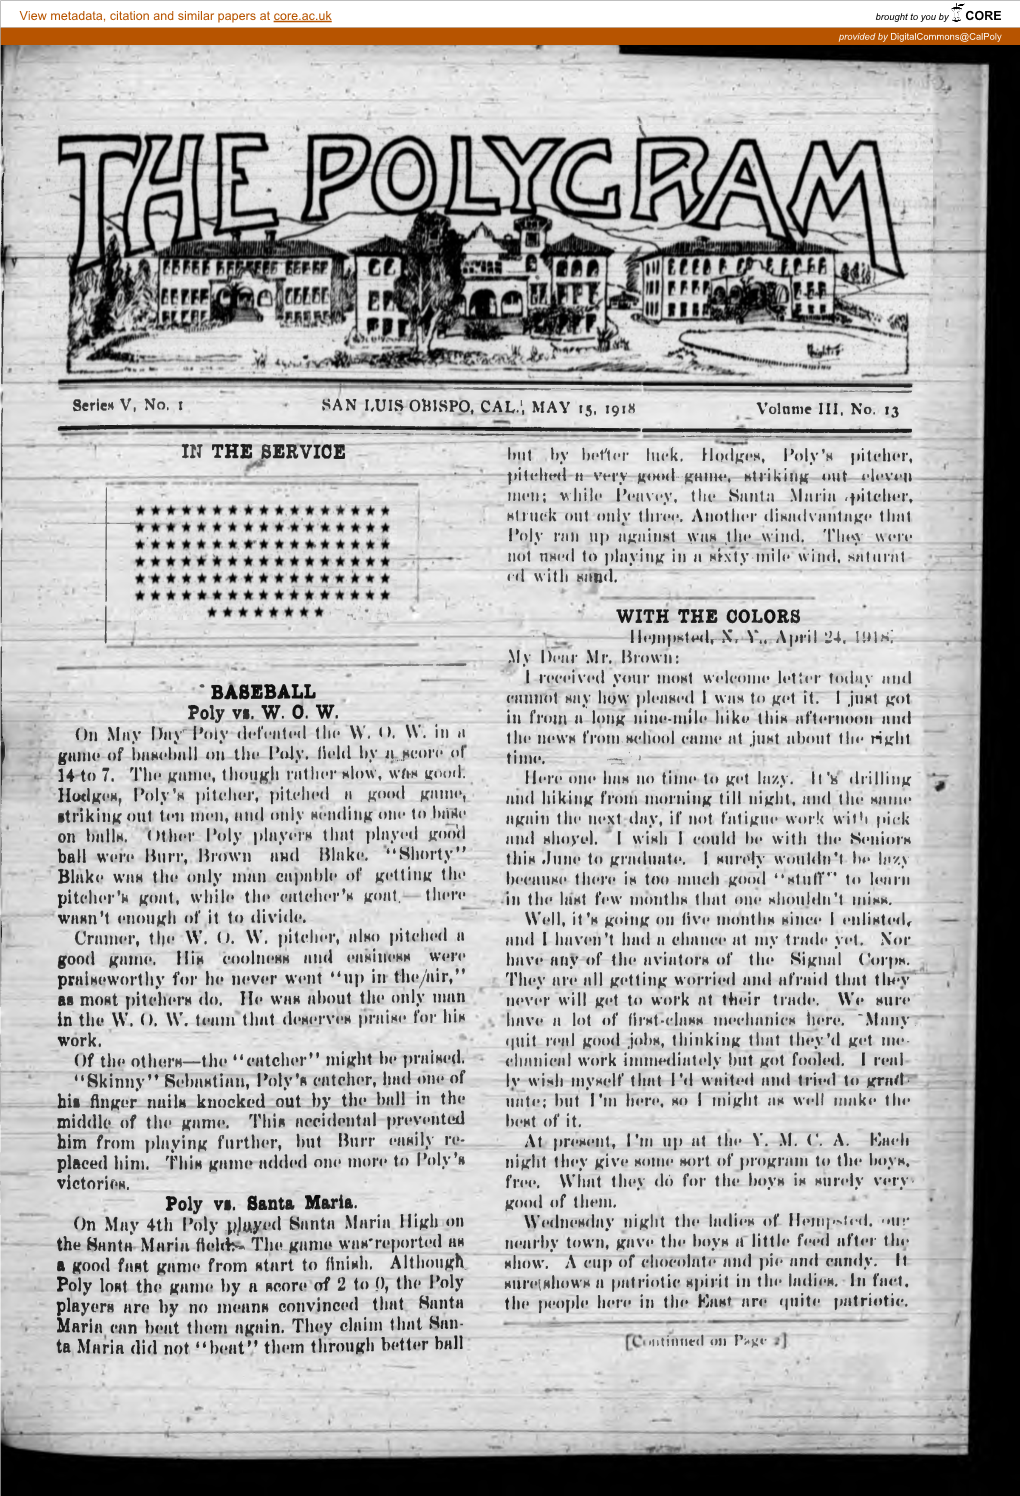 The Polygram, May 15, 1918